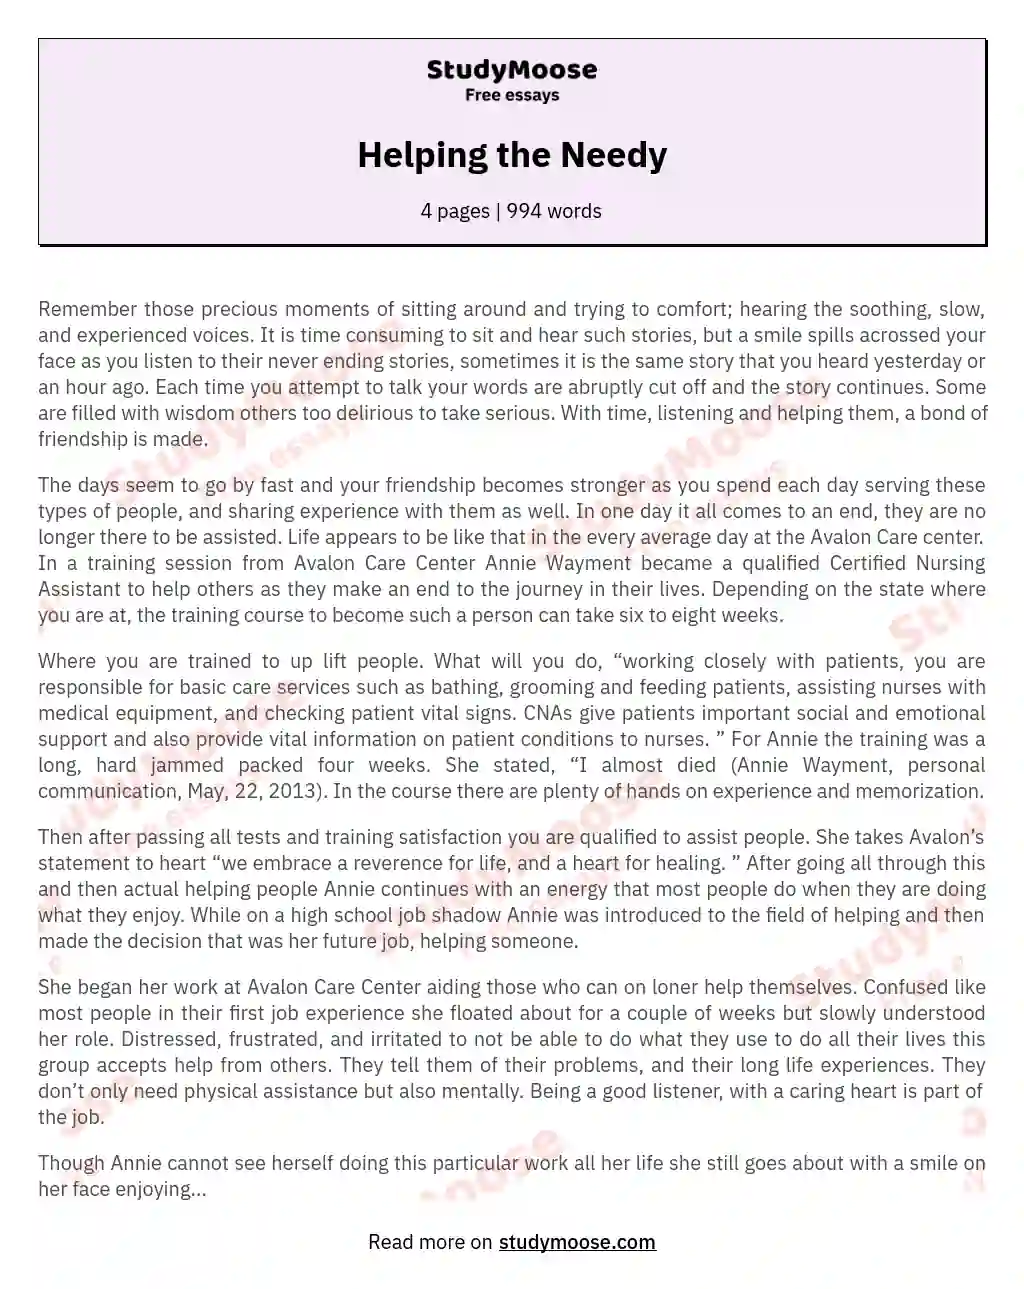 Helping the Needy essay